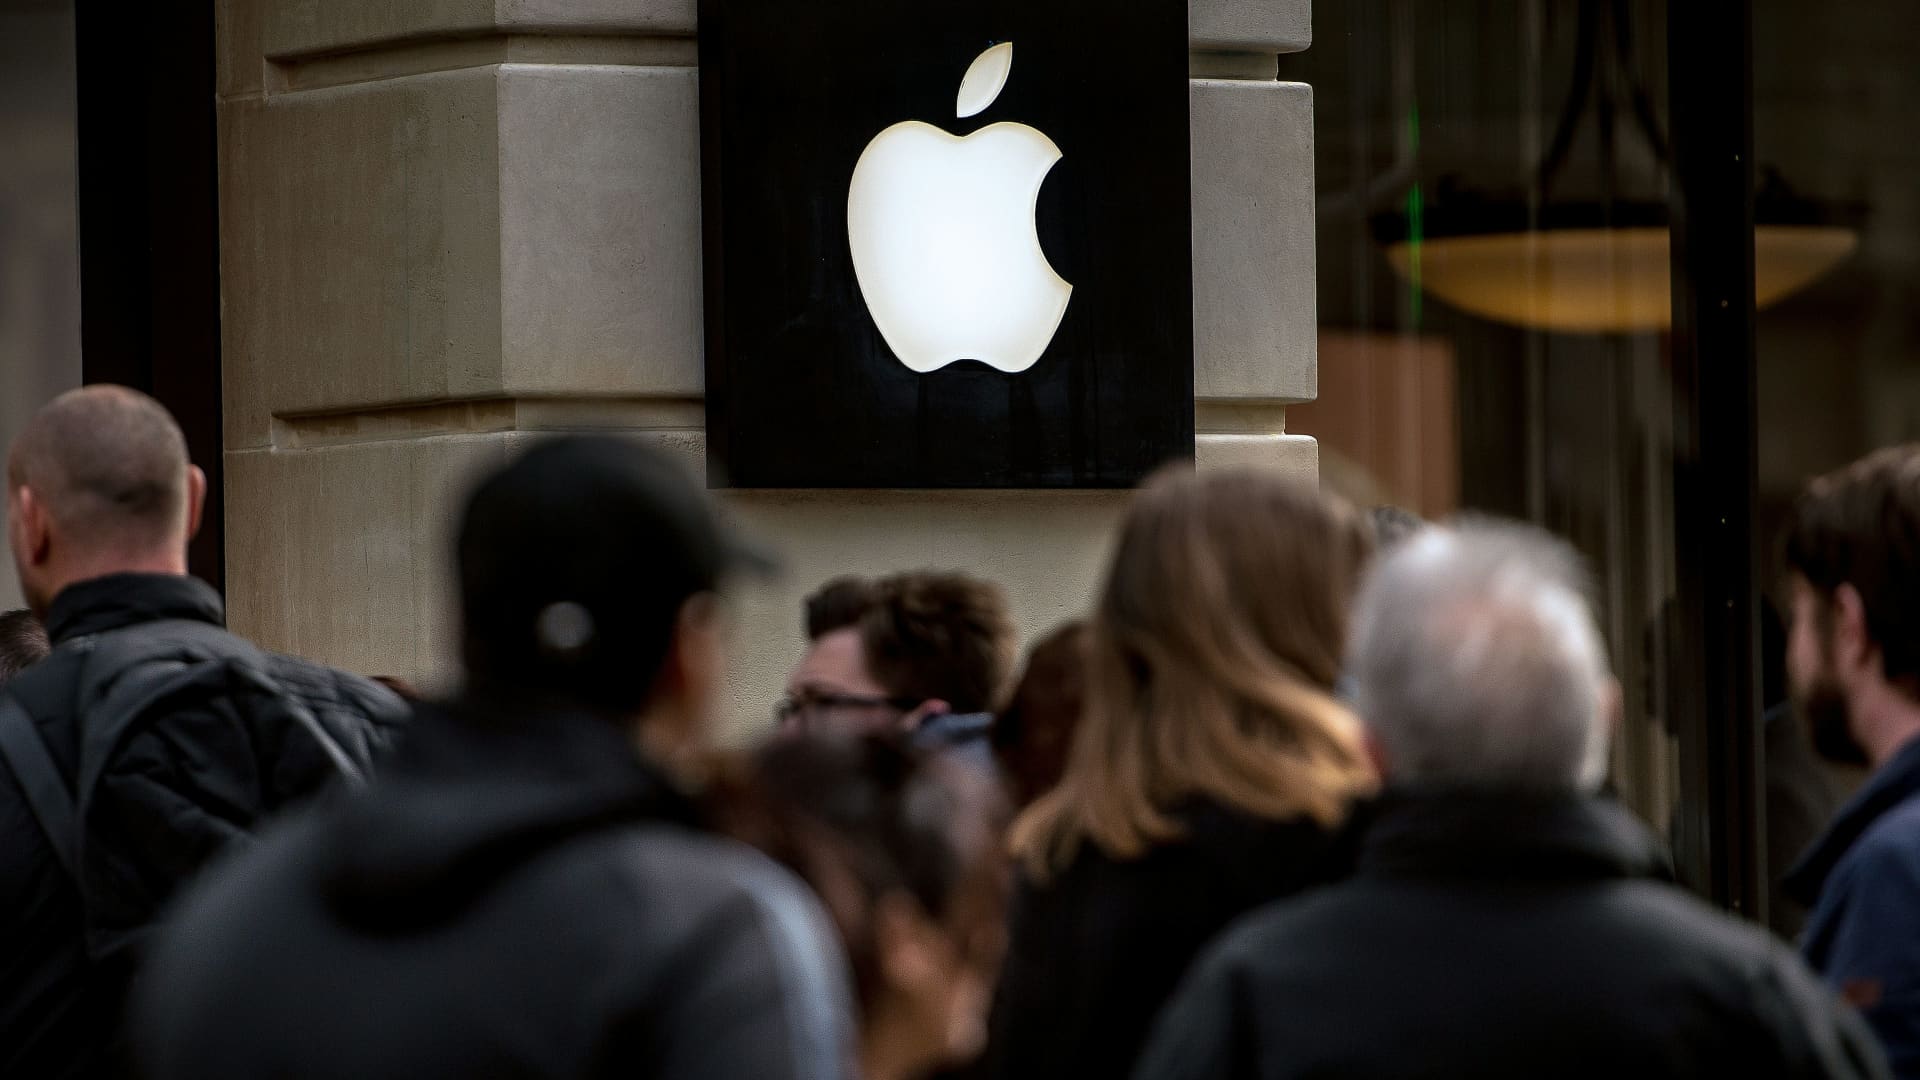 French court slashes Apple antitrust fine in blow to European regulators